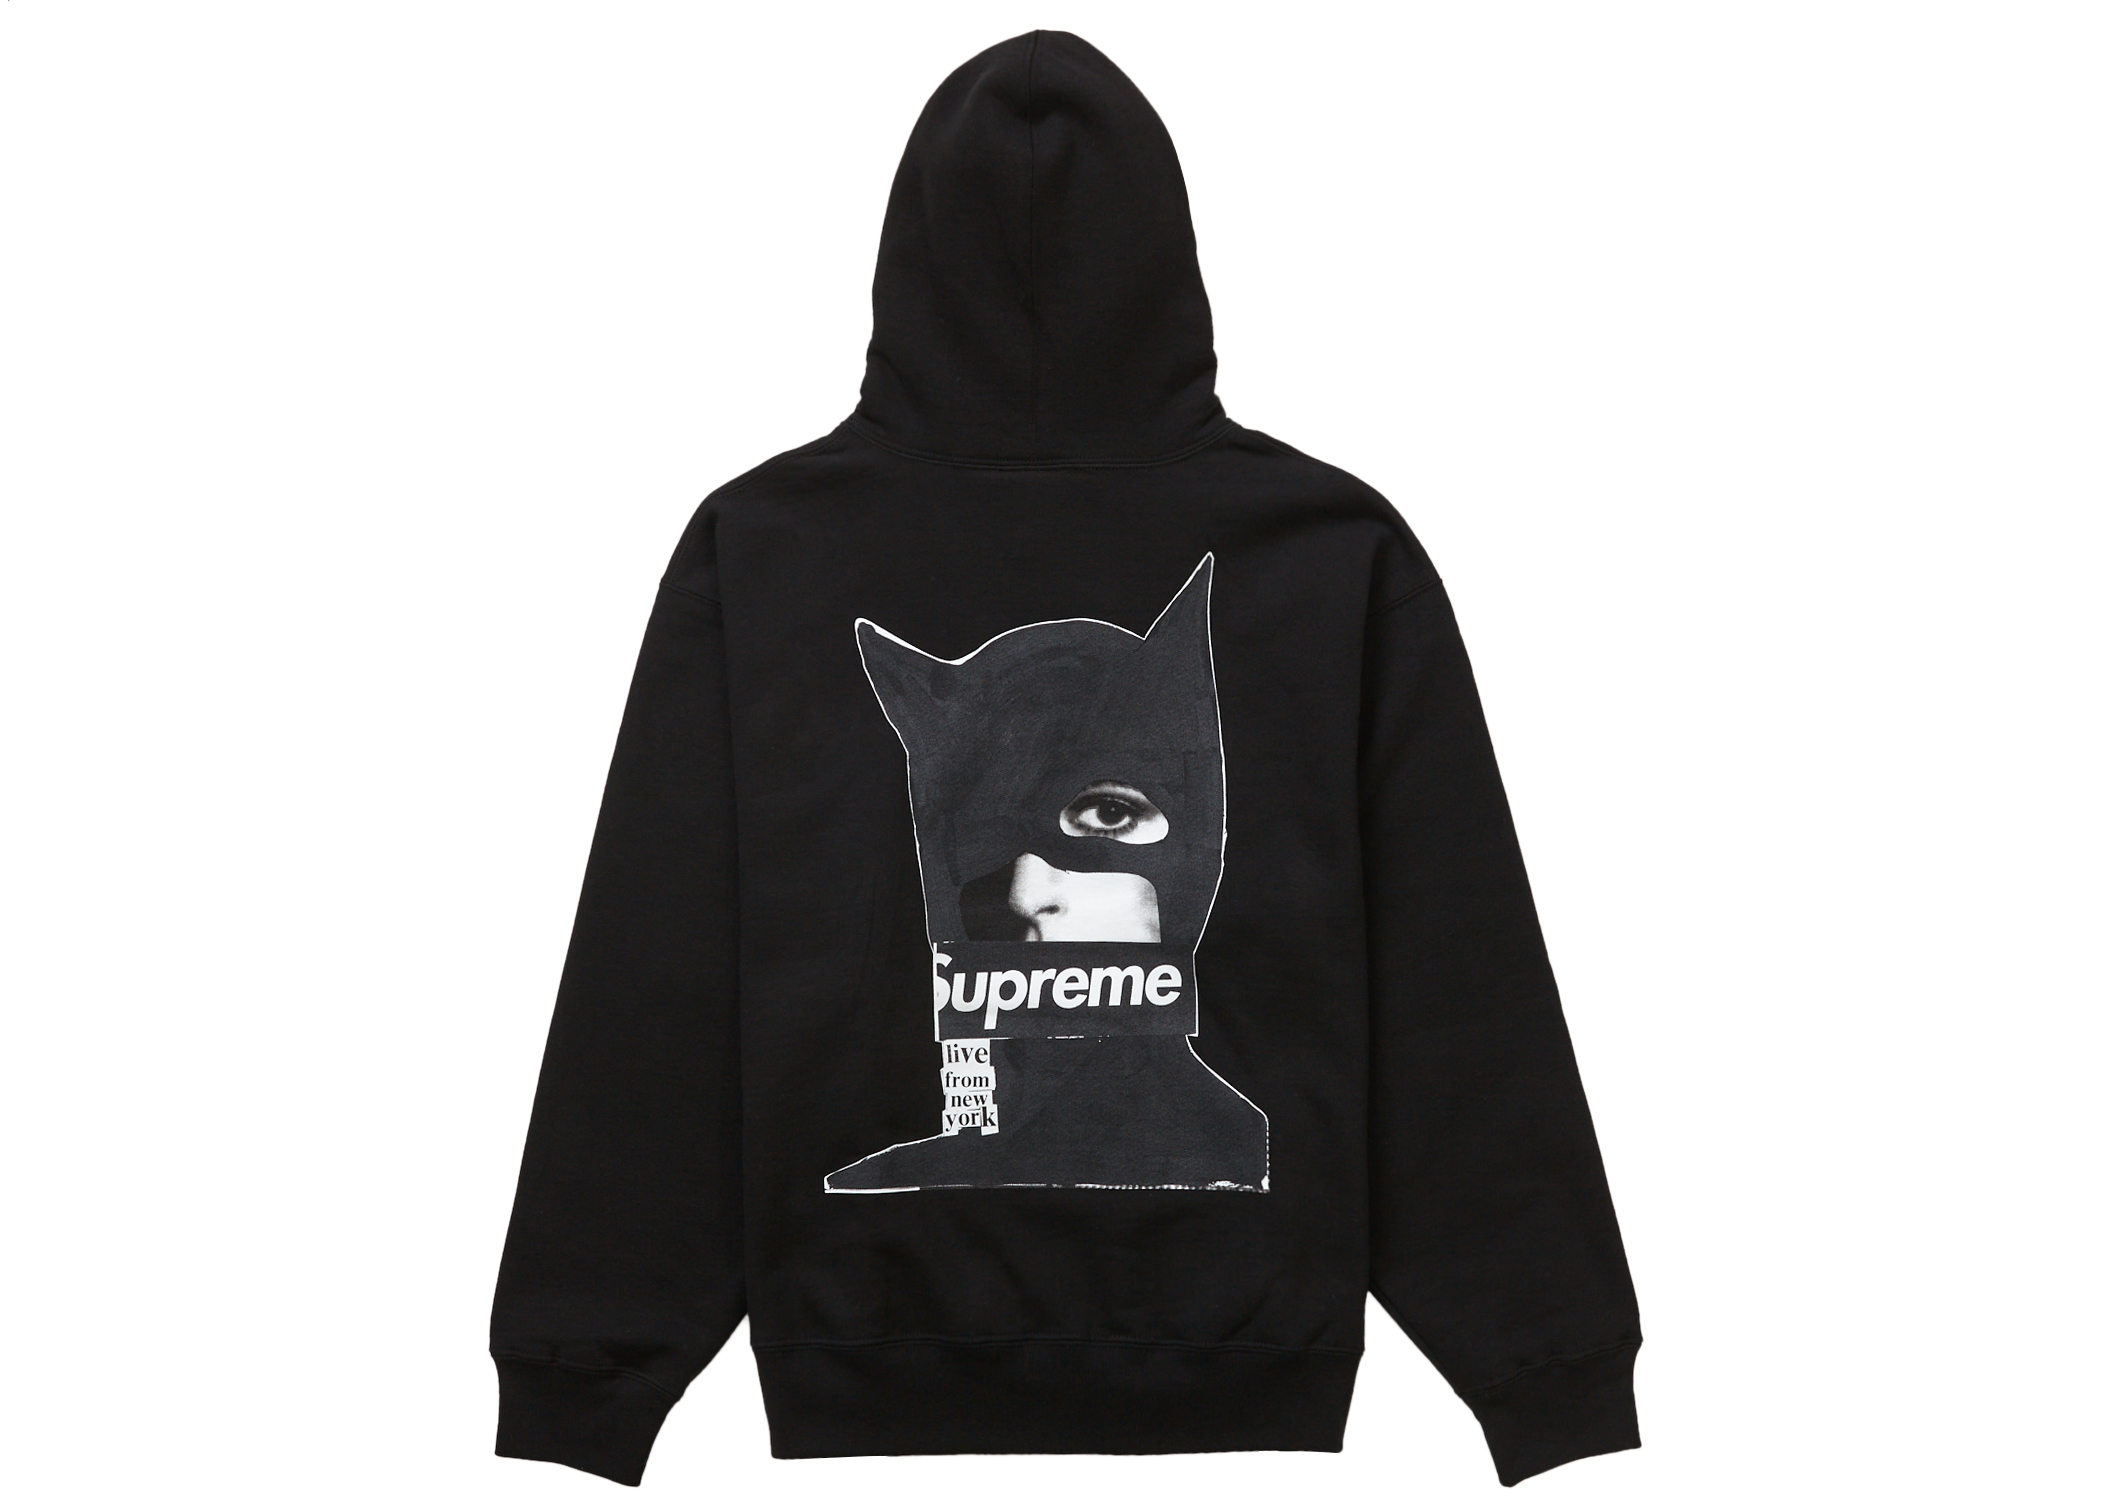 Supreme Catwoman hooded sweatshirt